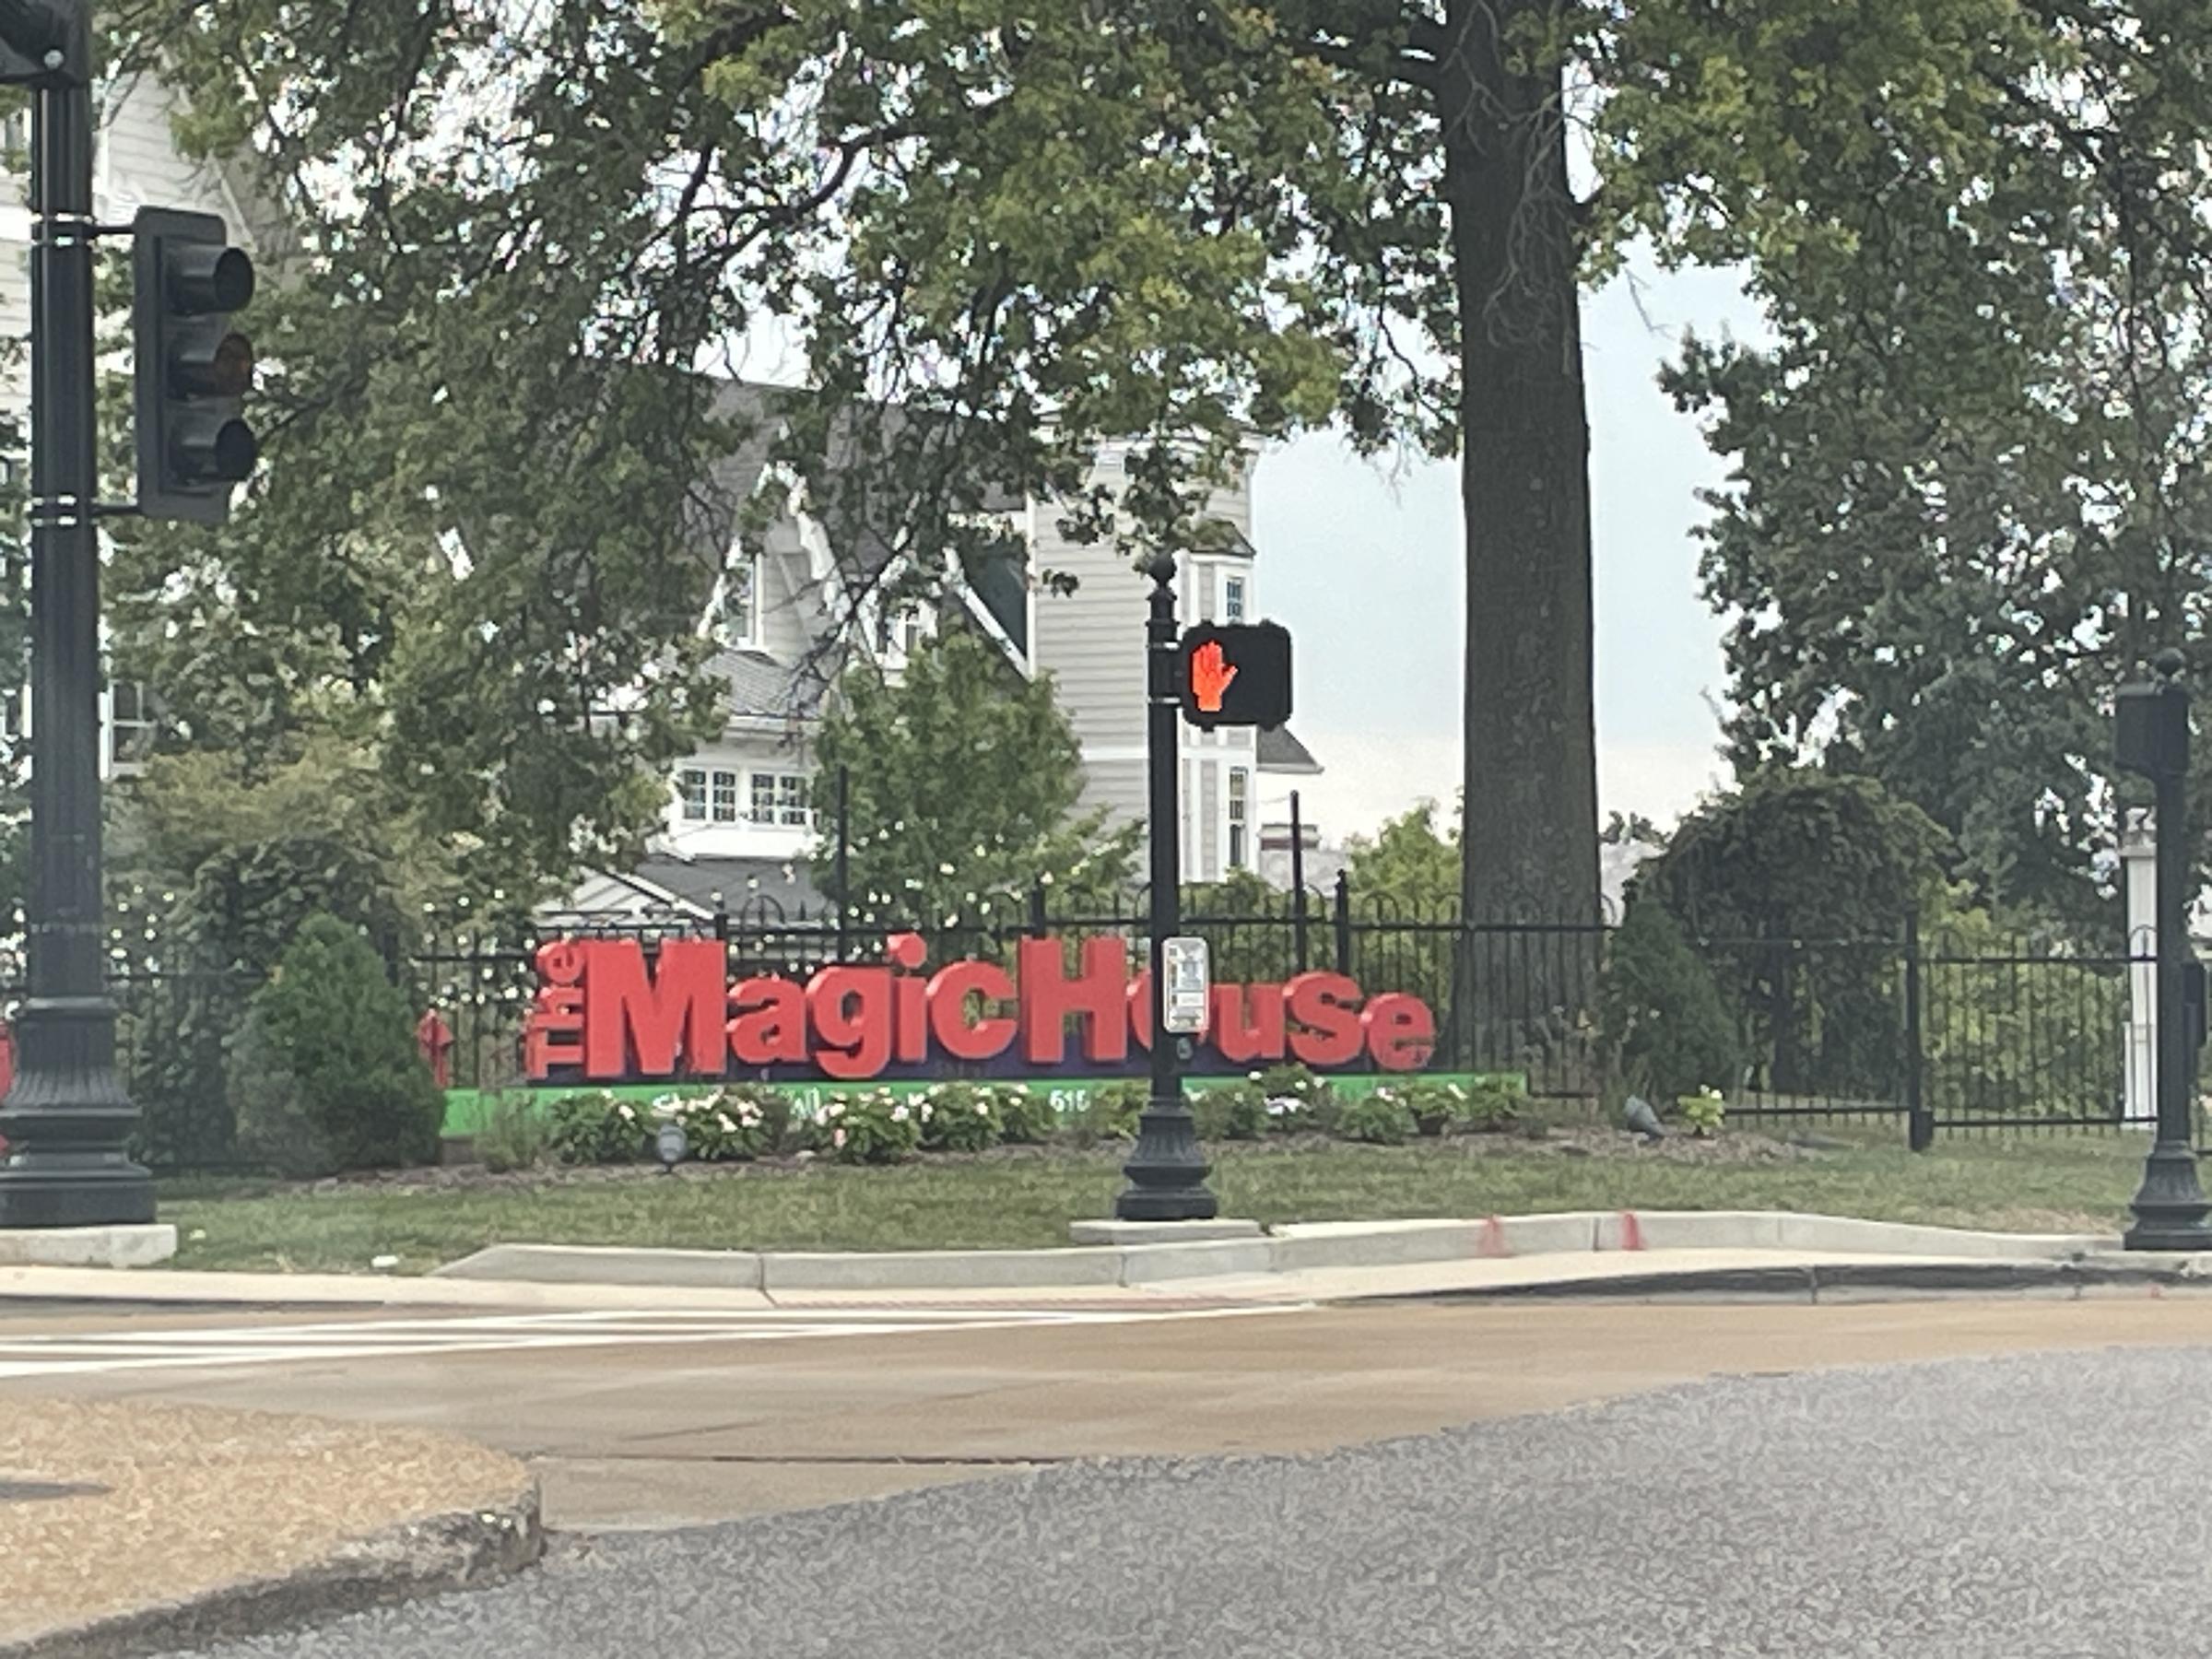 The Magic House Signage